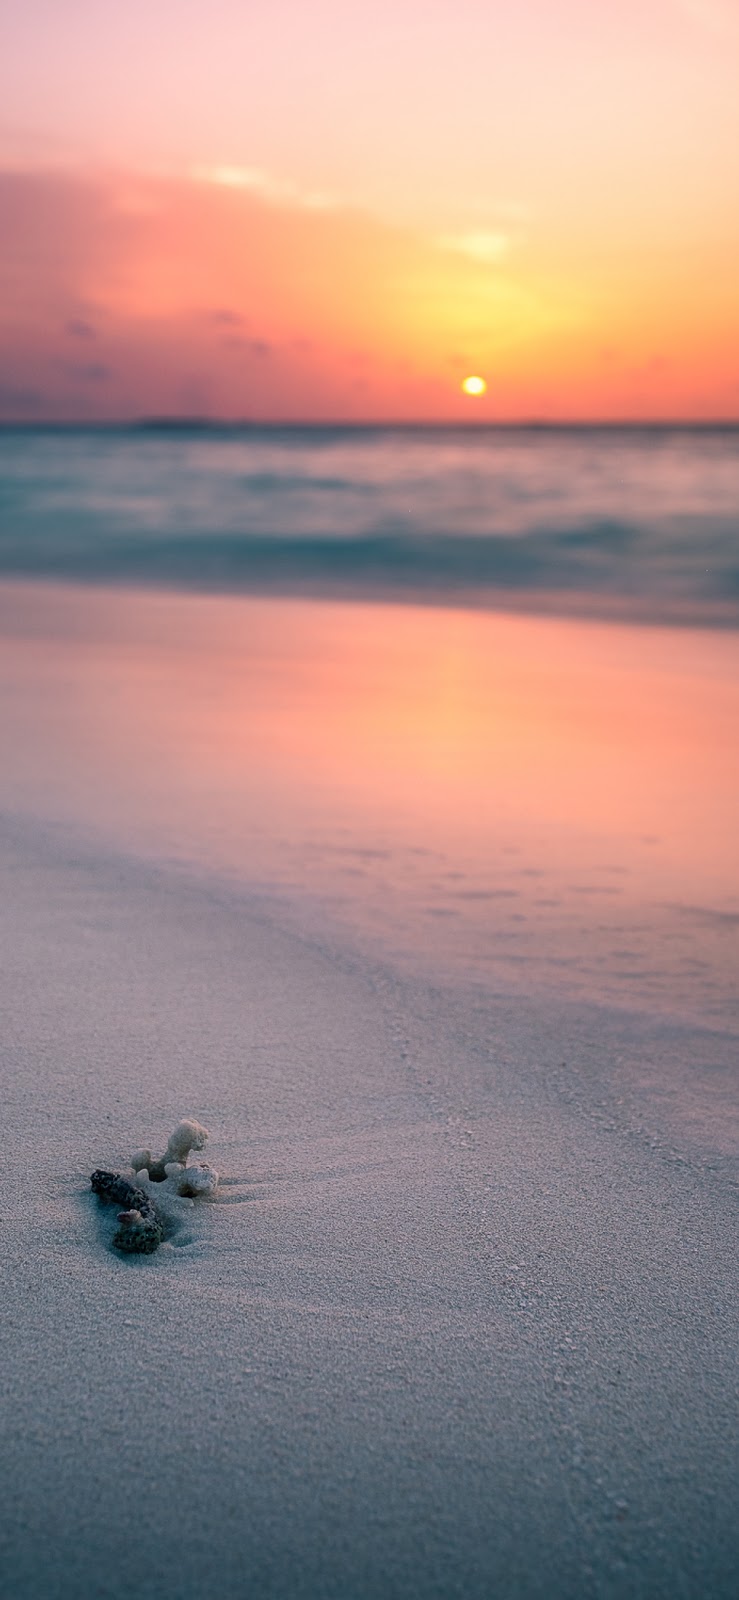 Sunset on the beach (iPhone X)